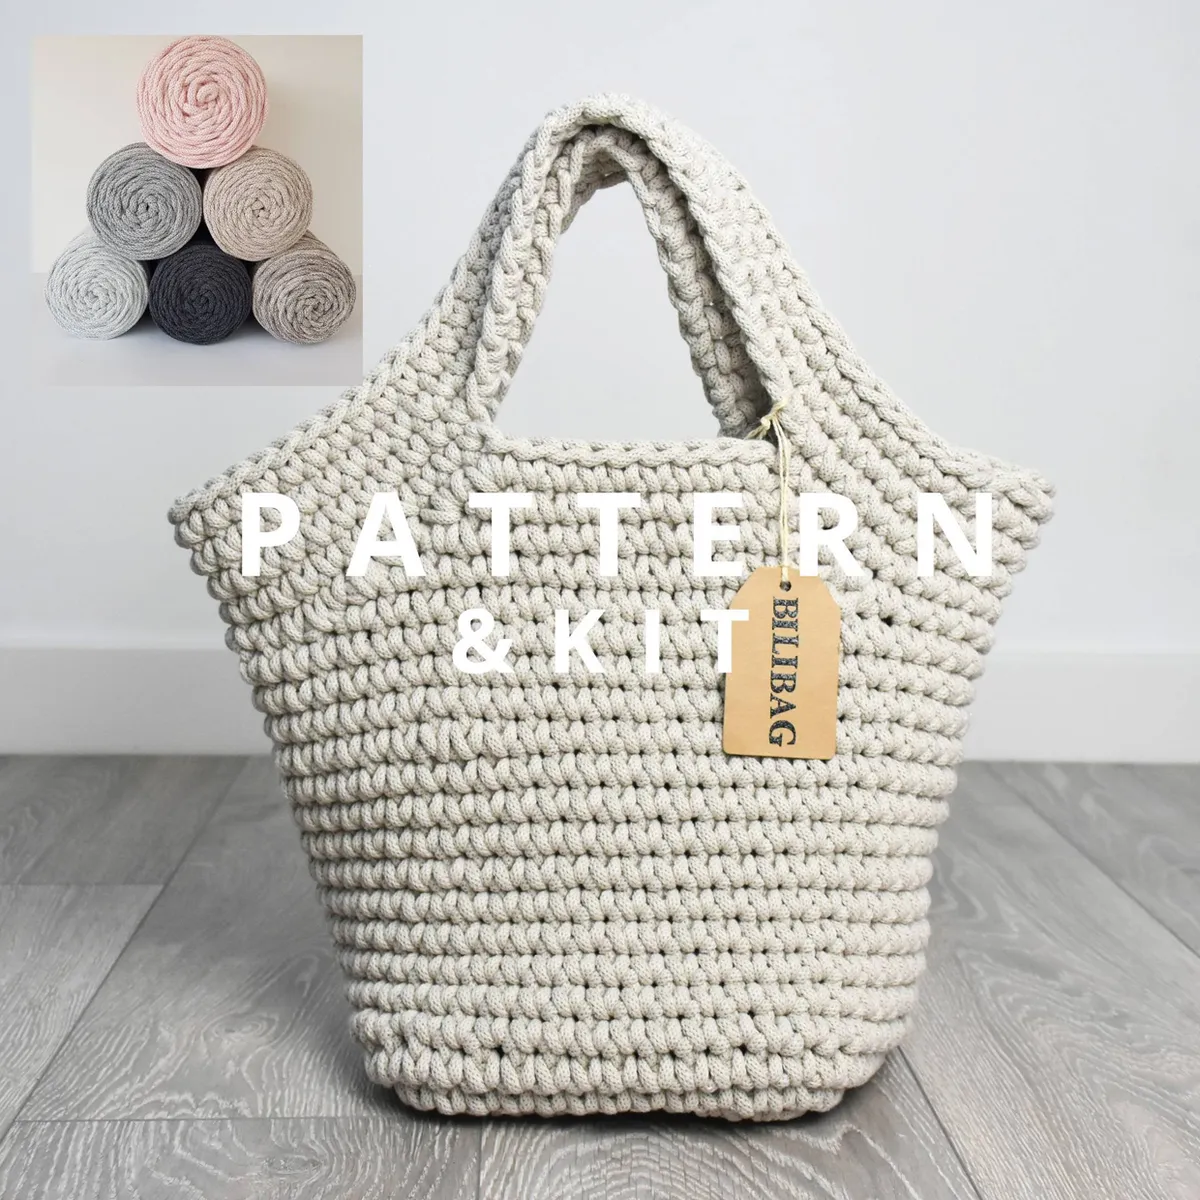 25 Free Crochet Basket Patterns - Sarah Maker